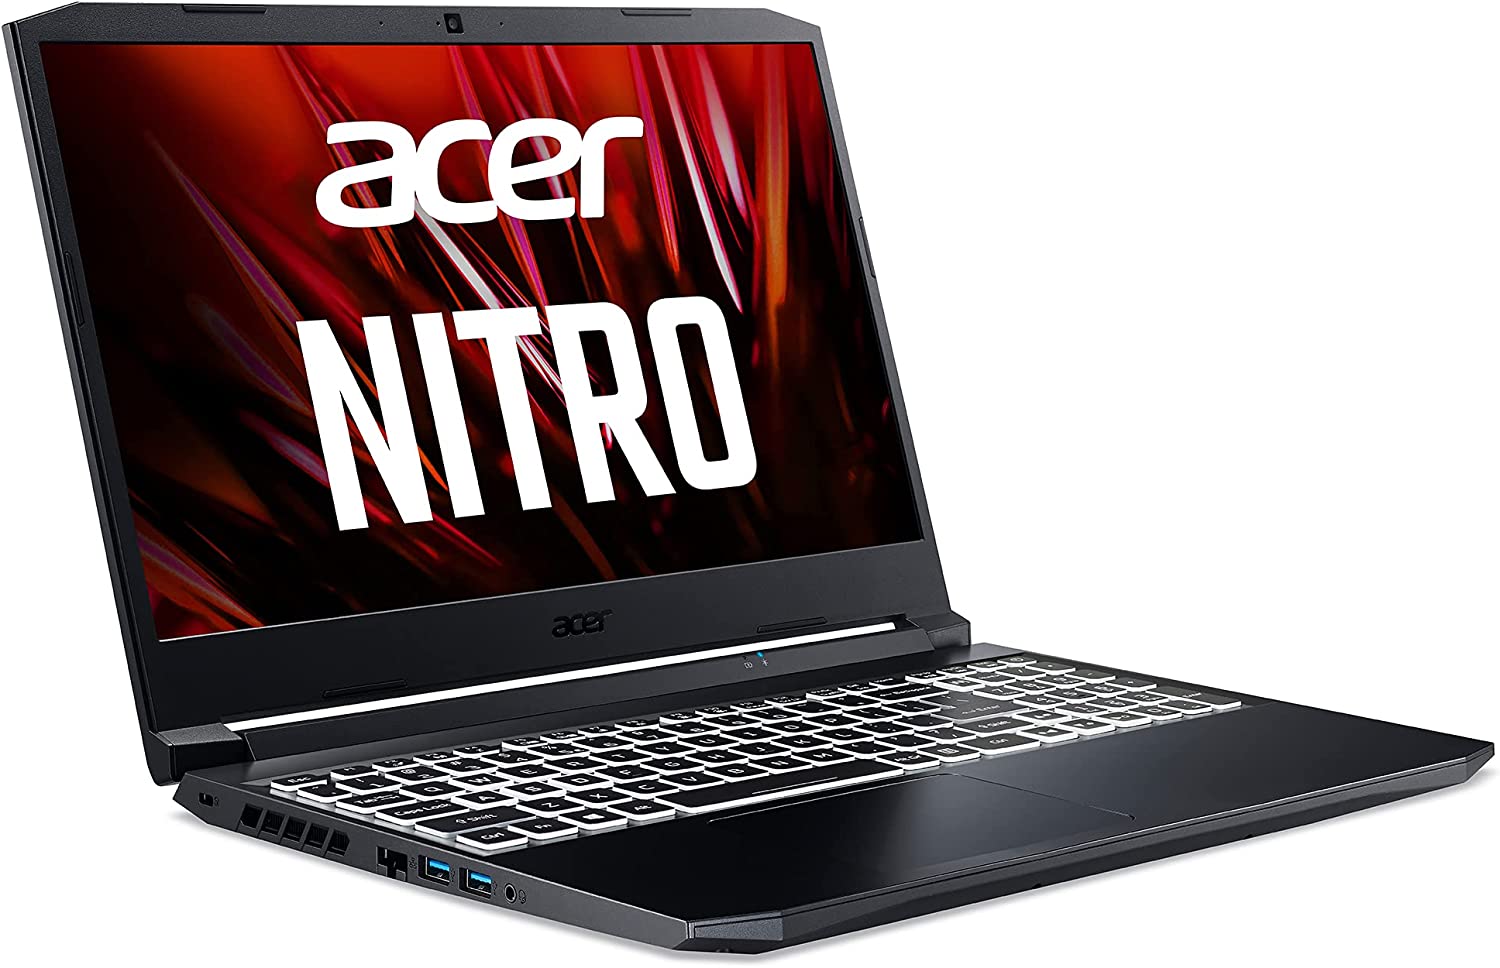 ACER NITRO 5 i7-11800H 16GB 1TB SSD RTX 3070 15.6 144HZ WINDOWS 10 HOME